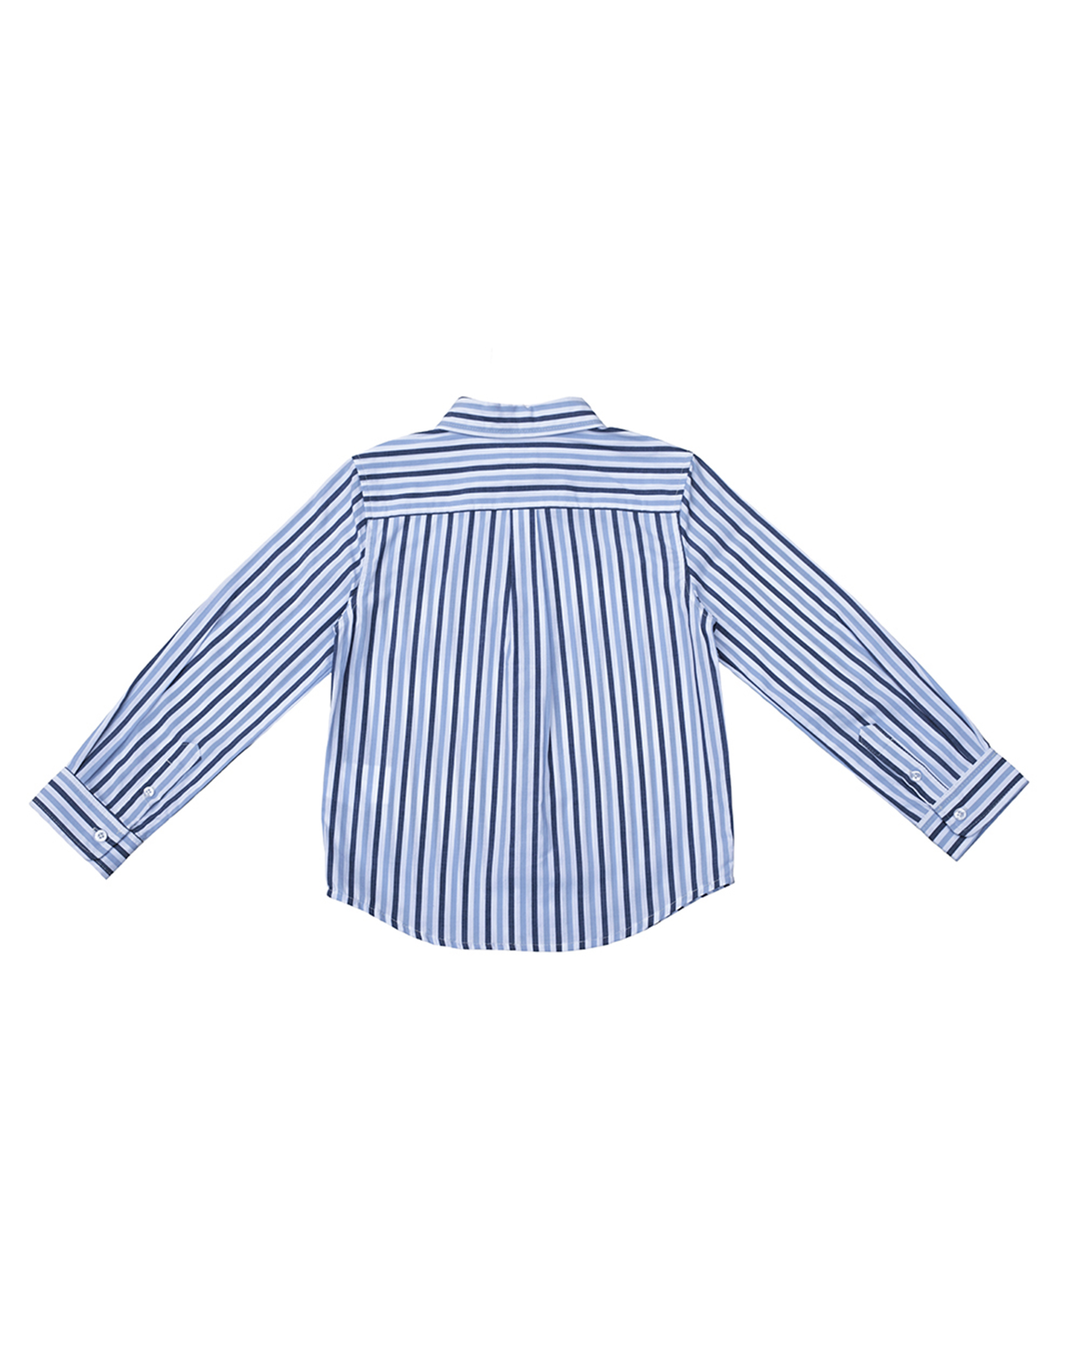 Camisa manga larga de rayas azules y blancas